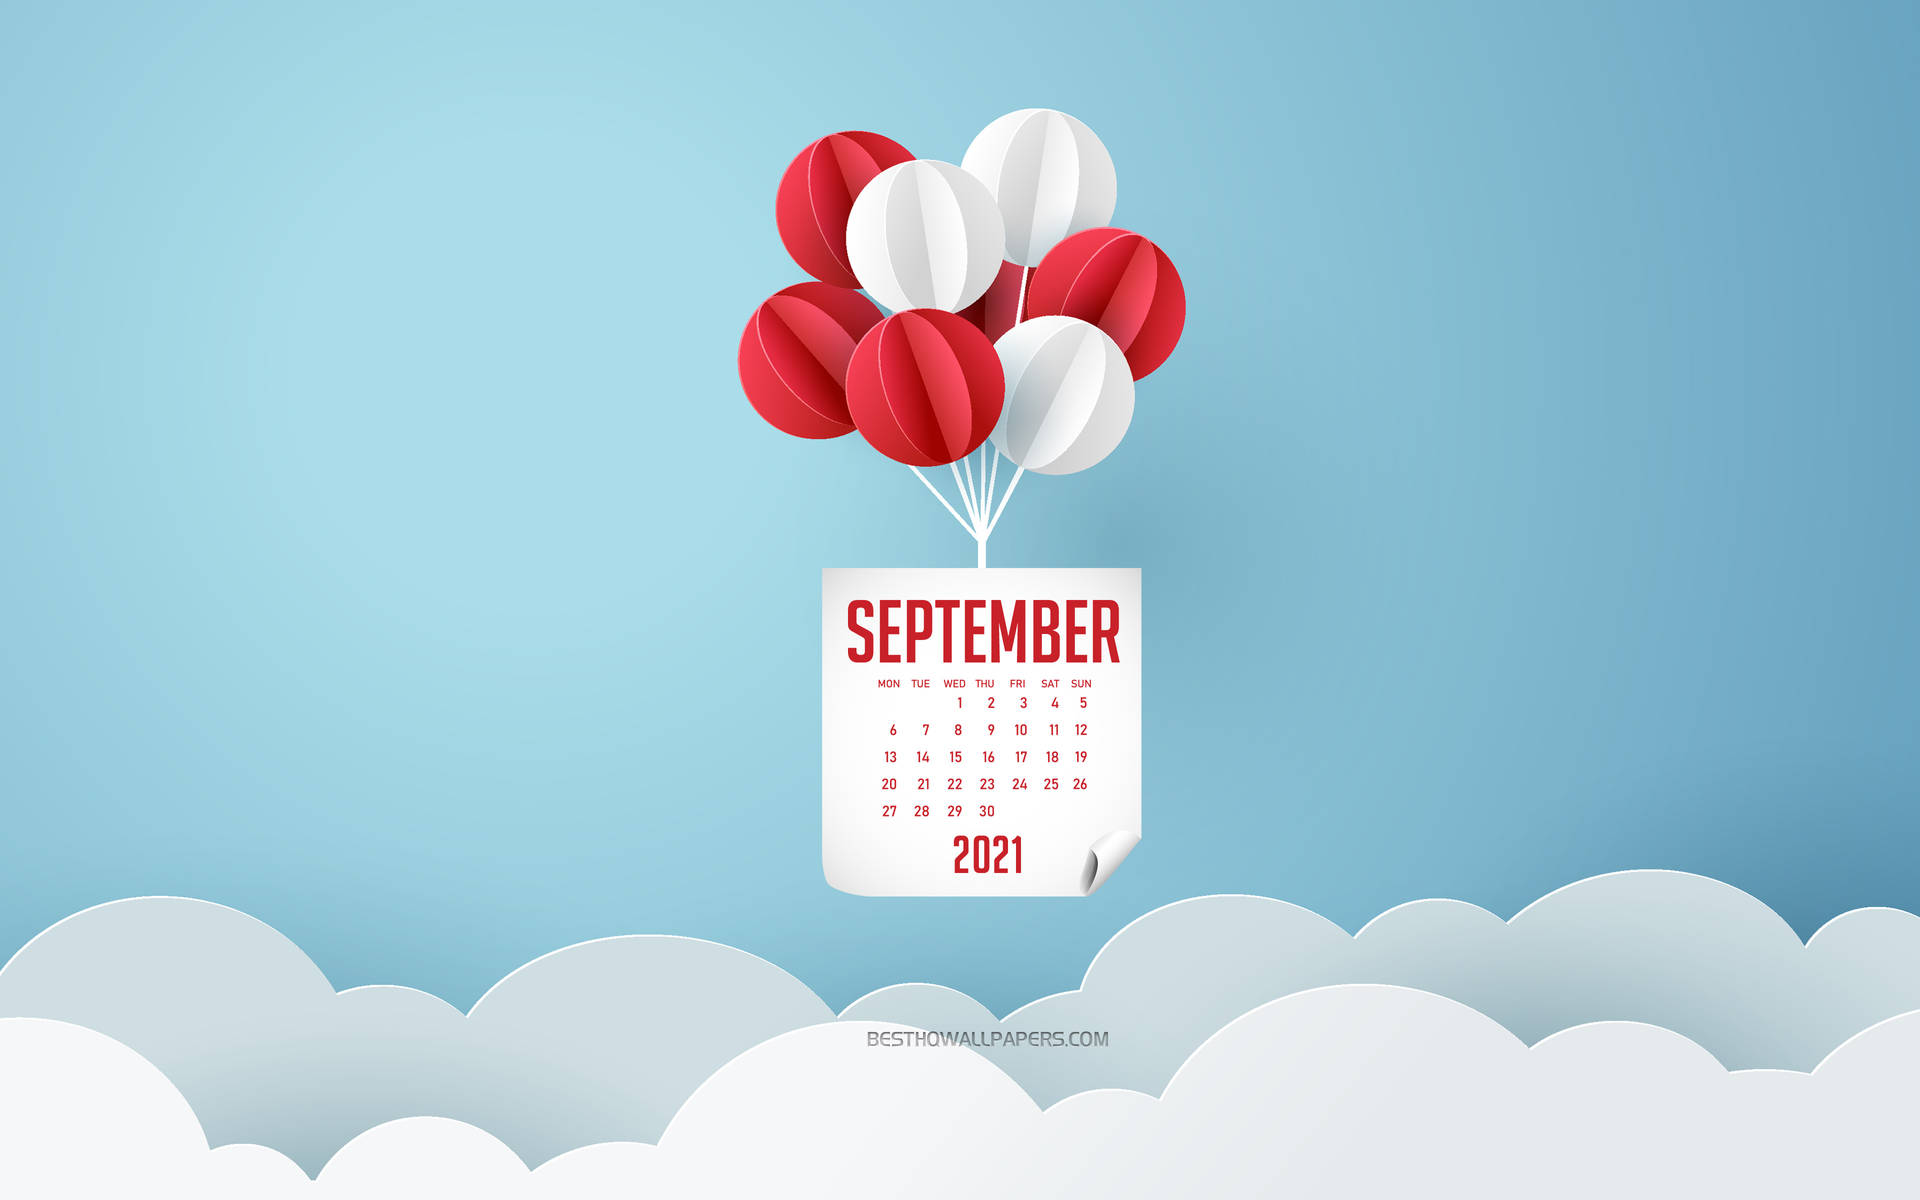 September 2021 Calendar With Balloons